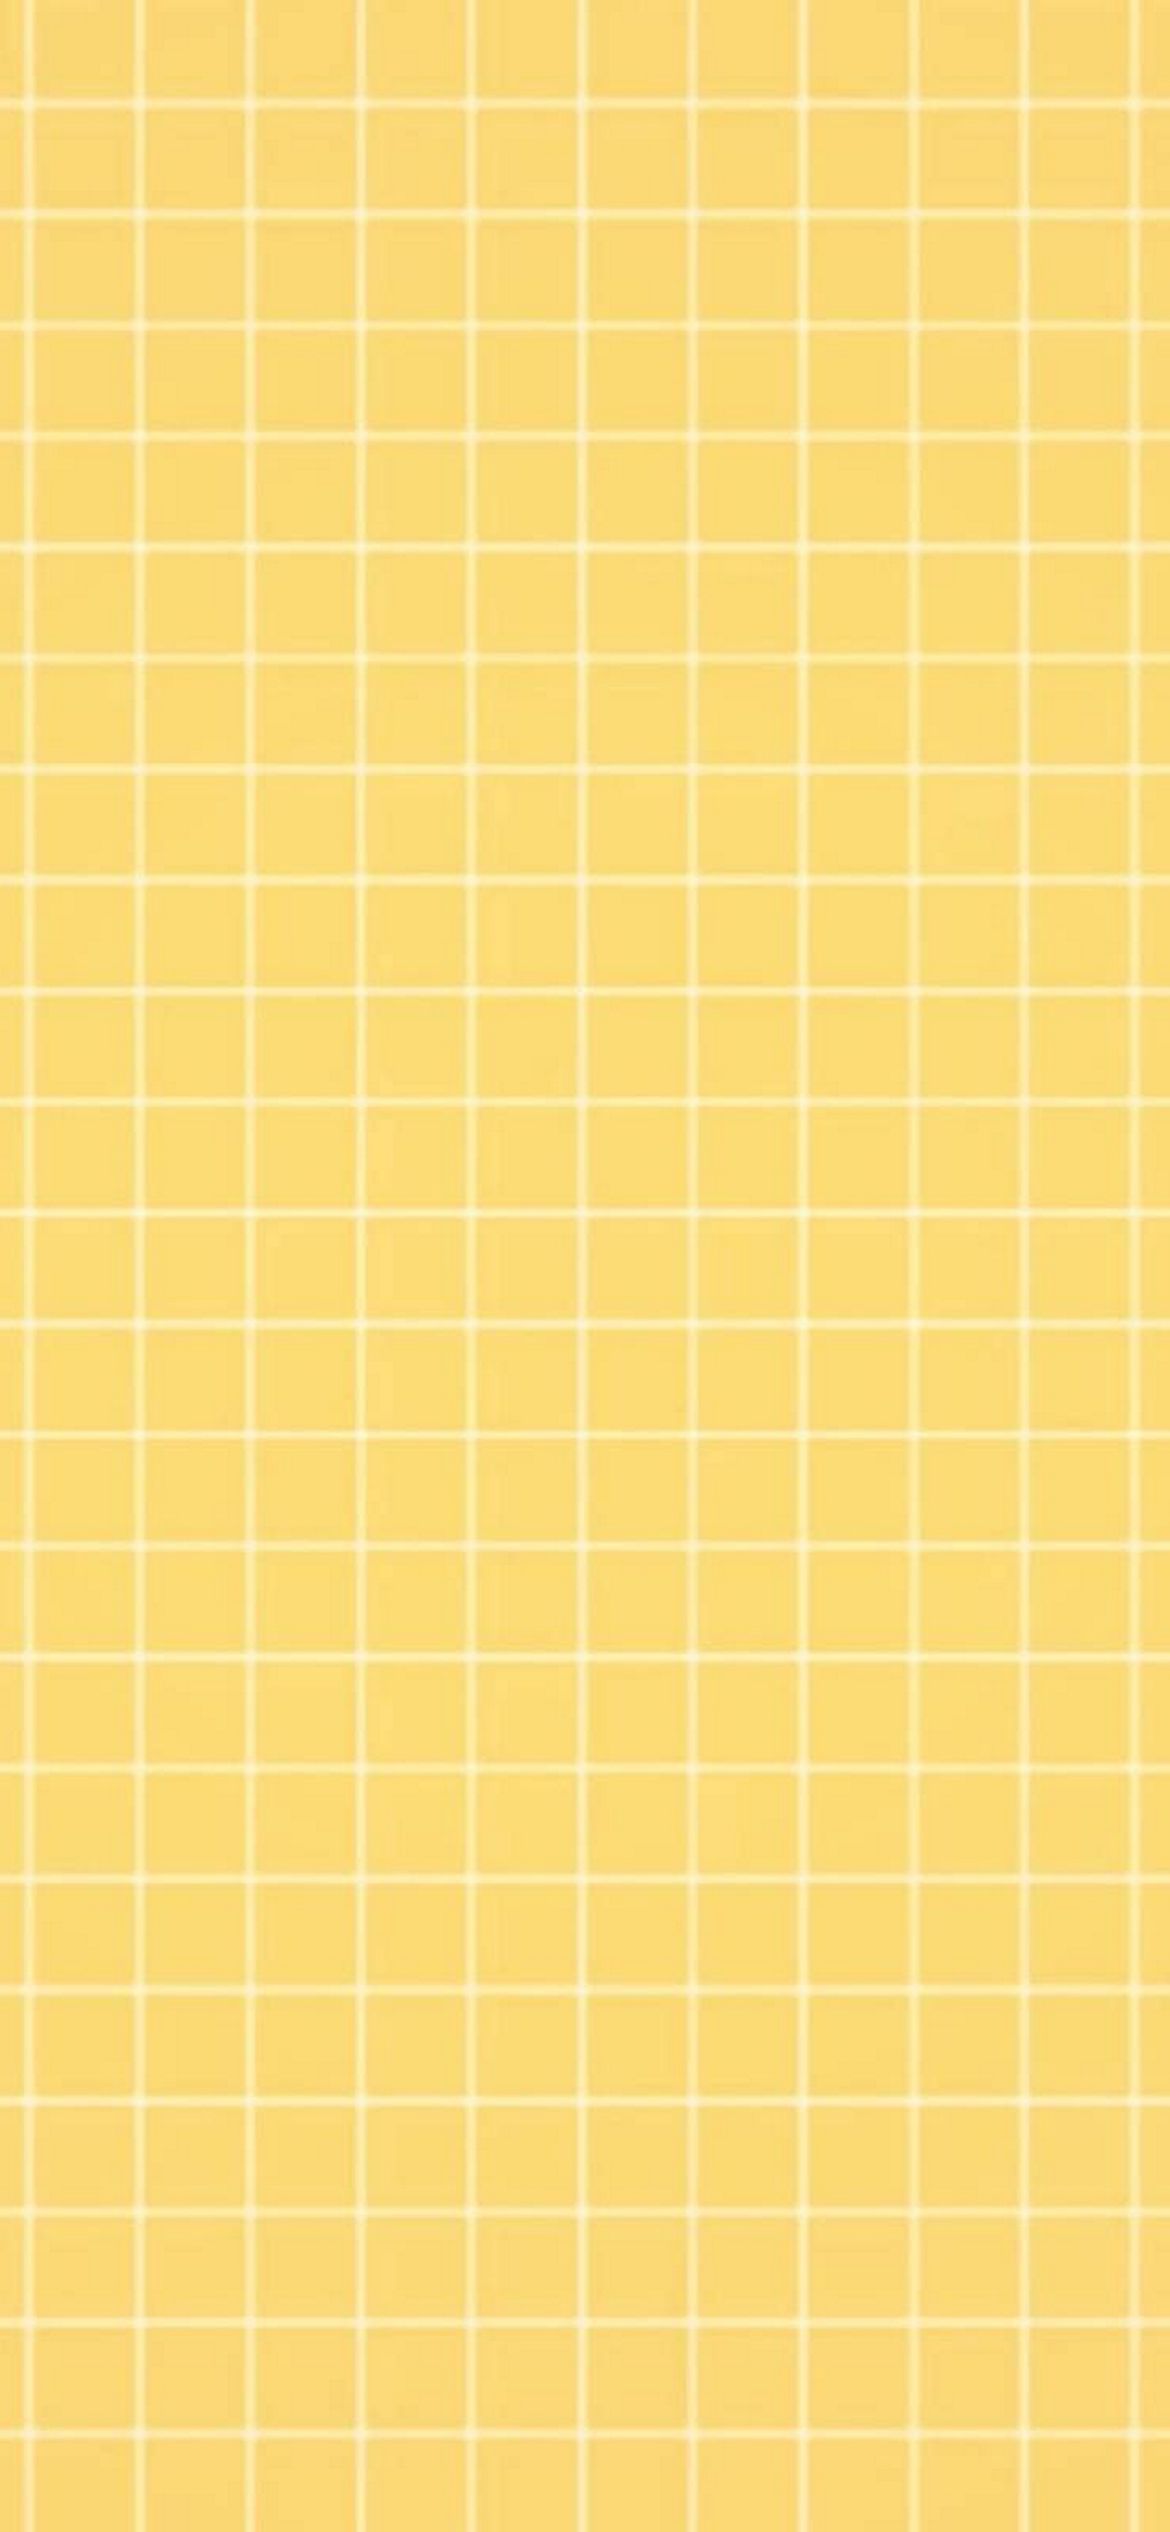 White checkered mobile wallpaper LGBTQ  Free Vector  rawpixel